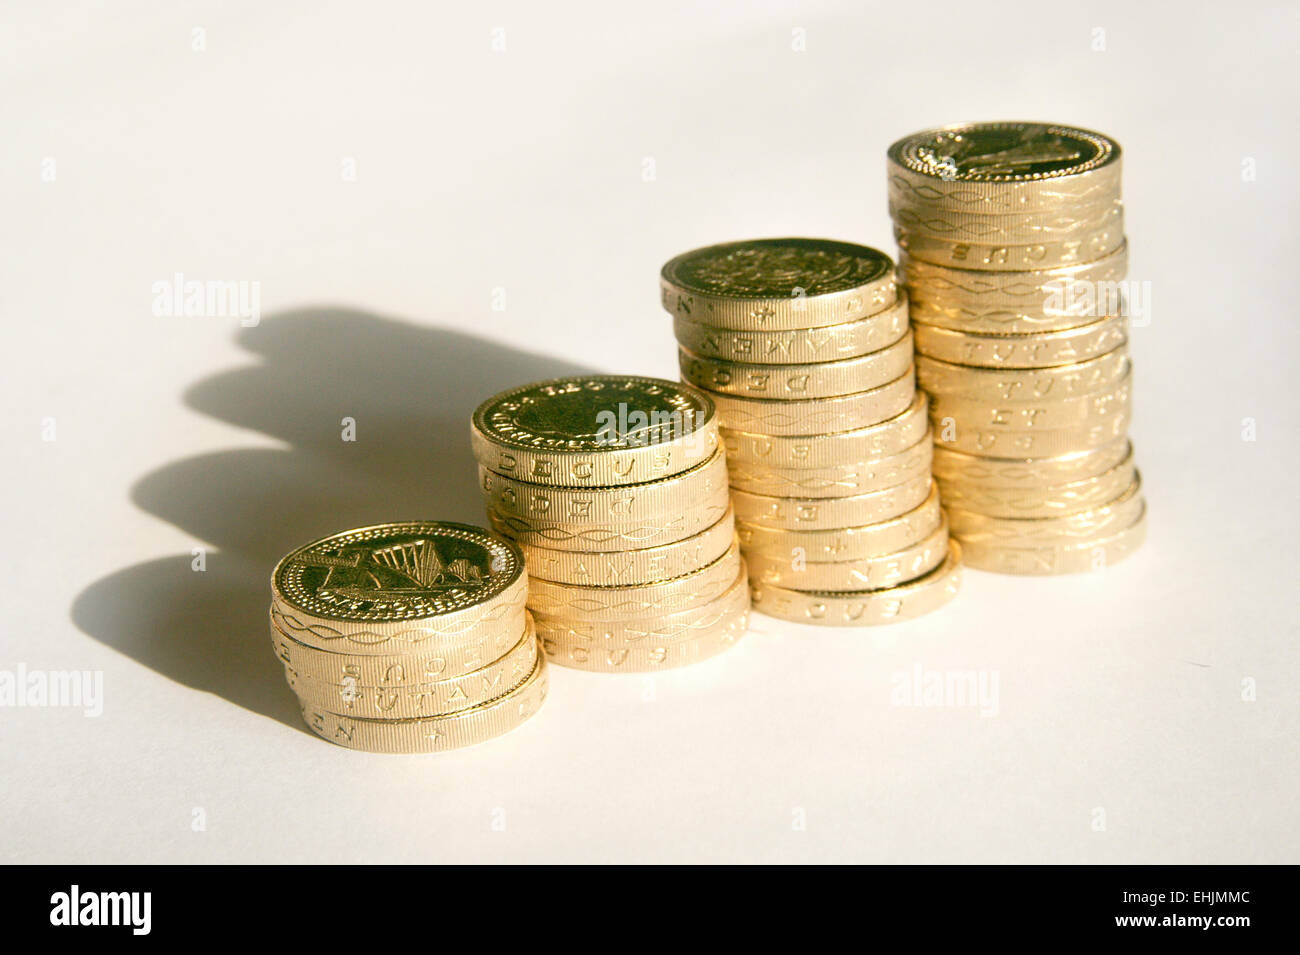 cash sterling pound coins uk england savings save economy economics inflation Stock Photo